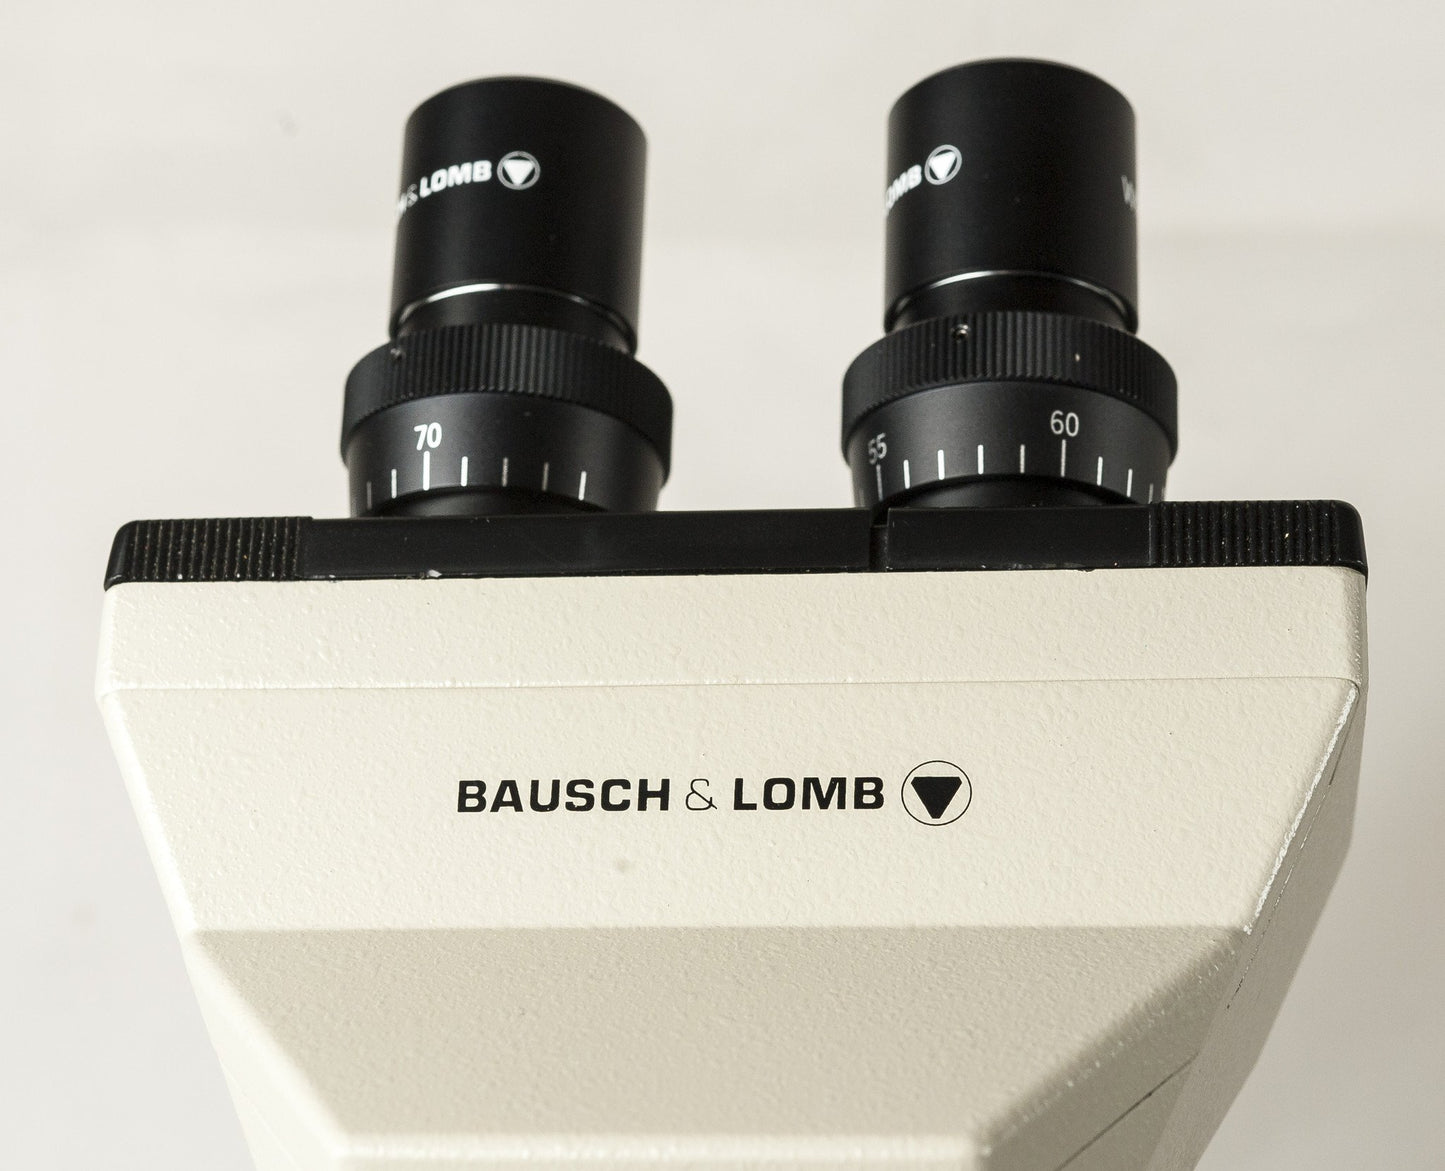 Bausch & Lomb Galen II Microscope - Microscope Central
 - 8